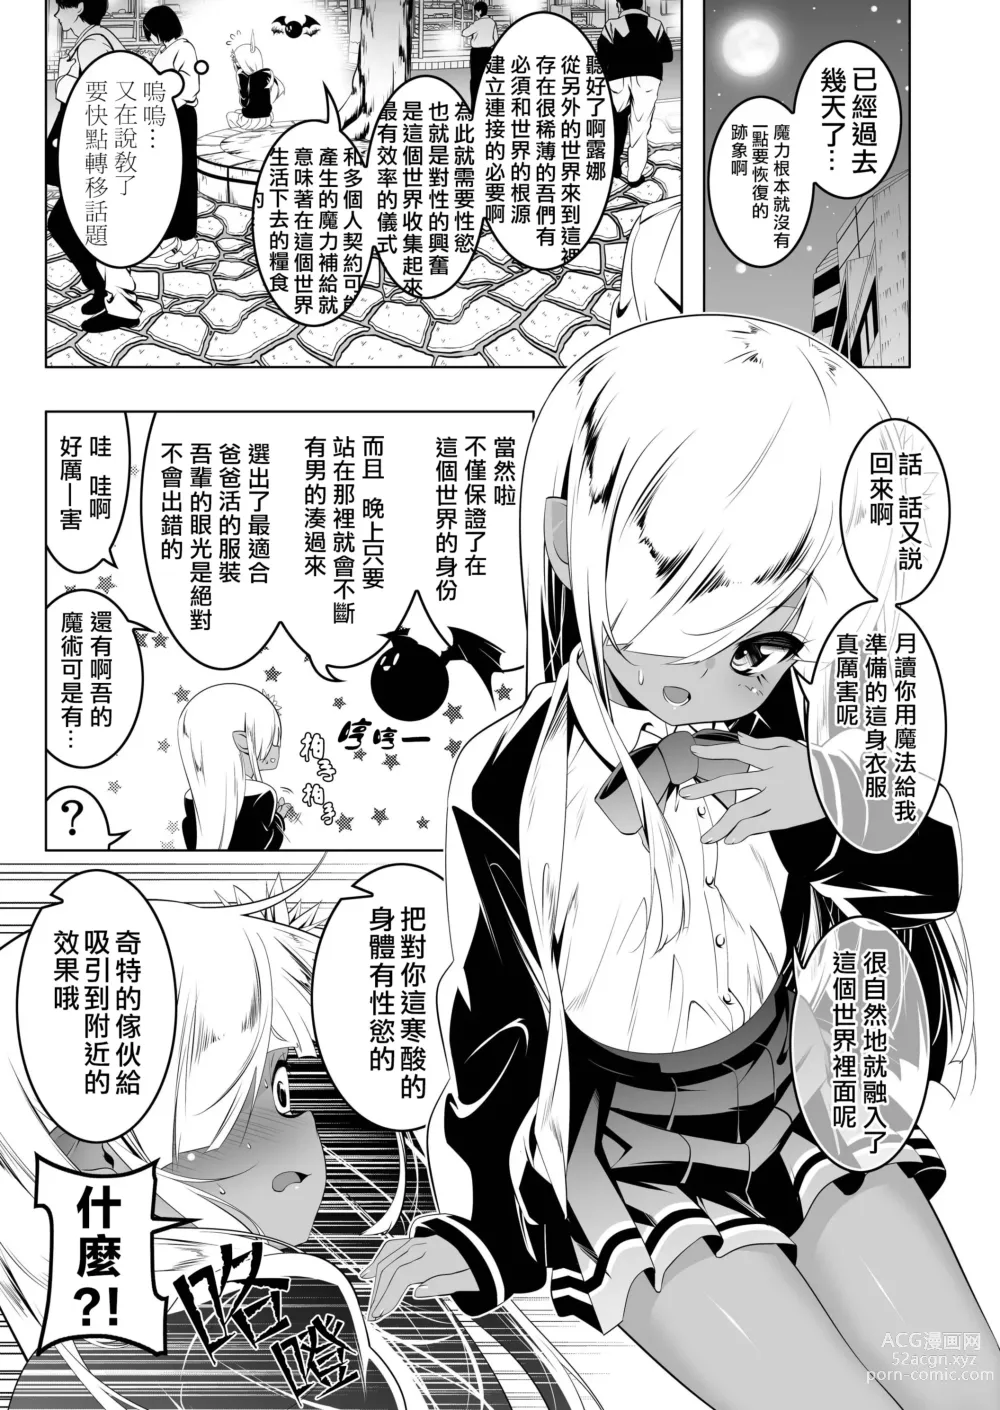 Page 8 of doujinshi Papakatsu Little Witch 1